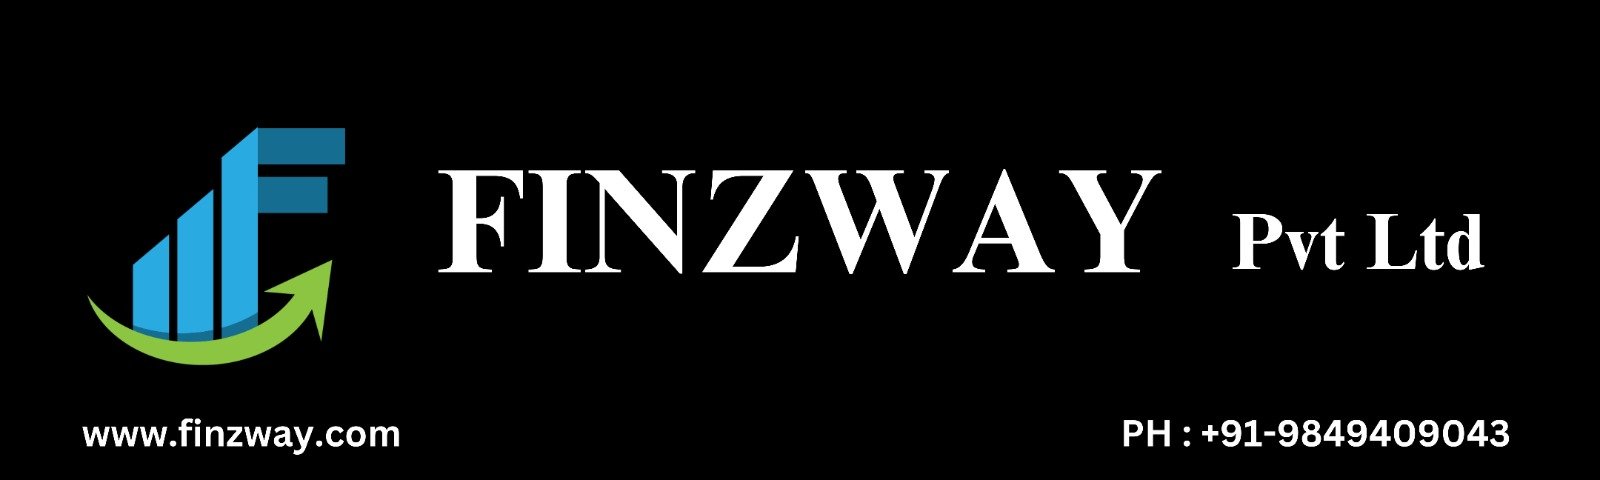 Finzway Pvt. Ltd